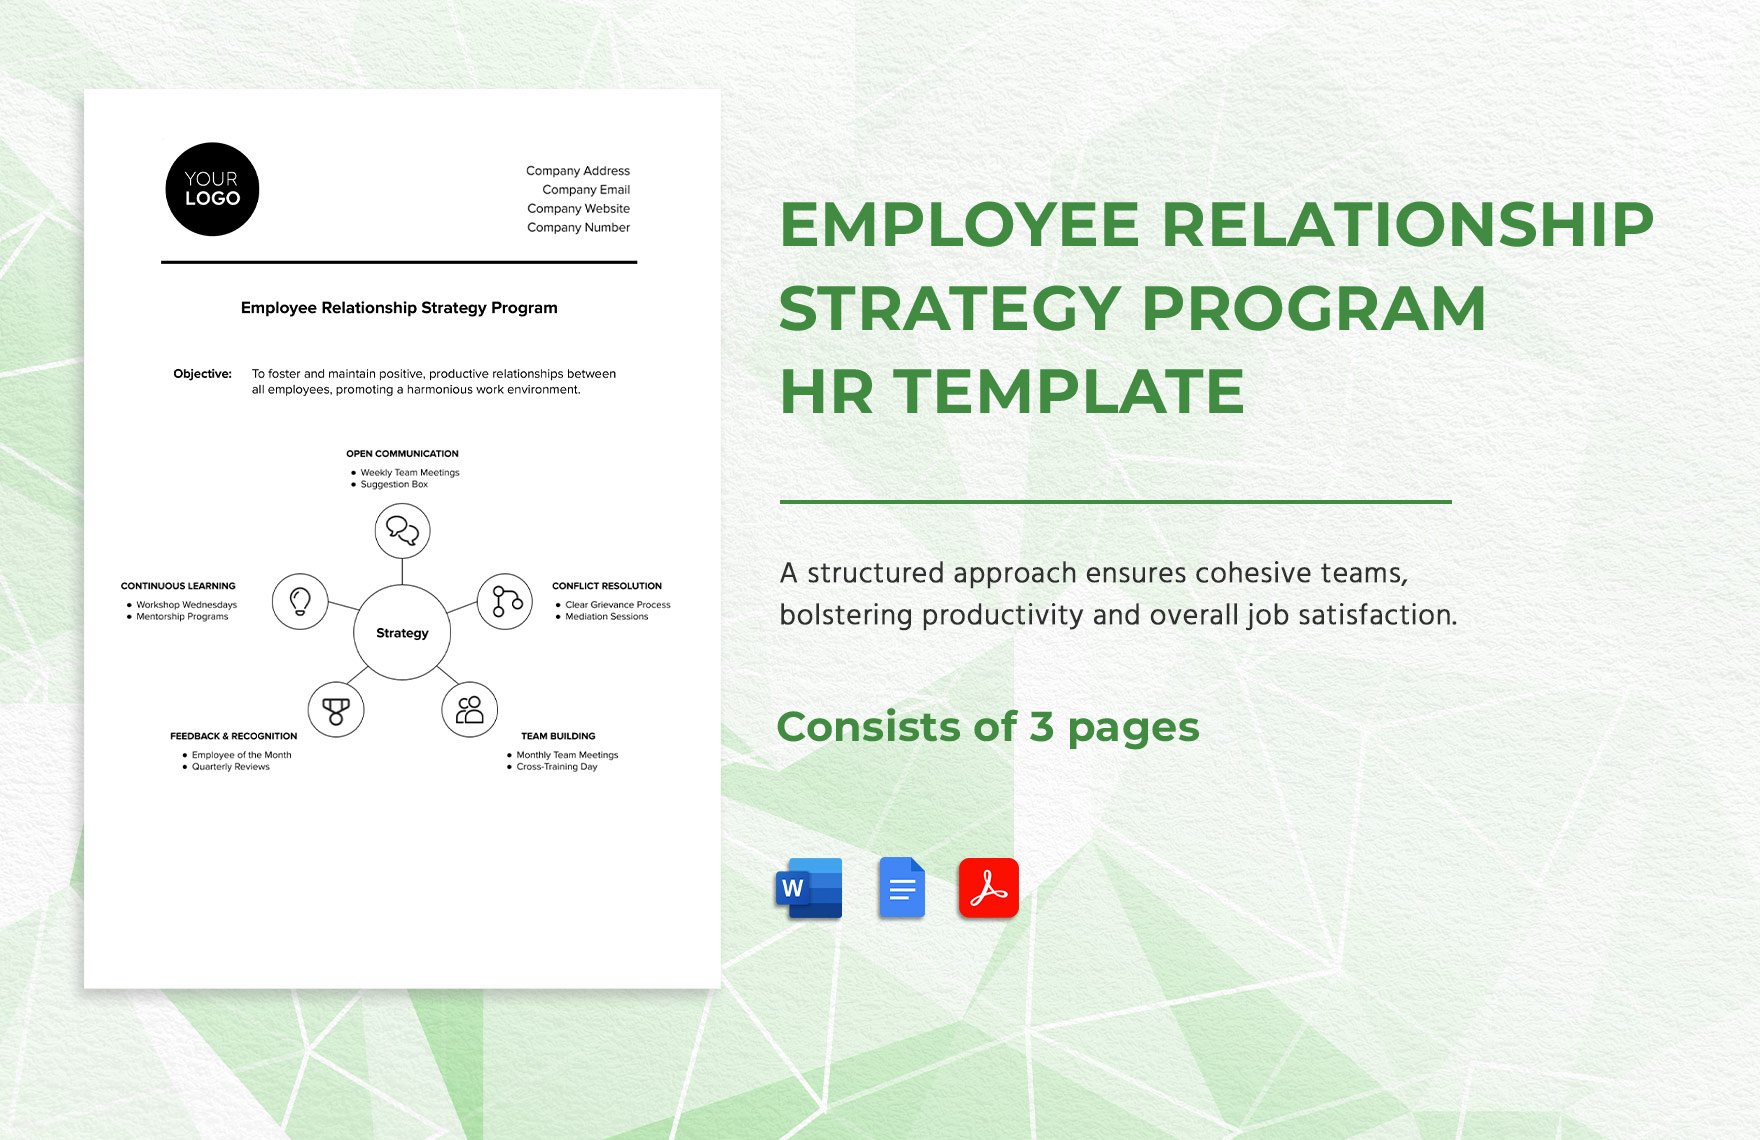 Employee Relationship Strategy Program HR Template